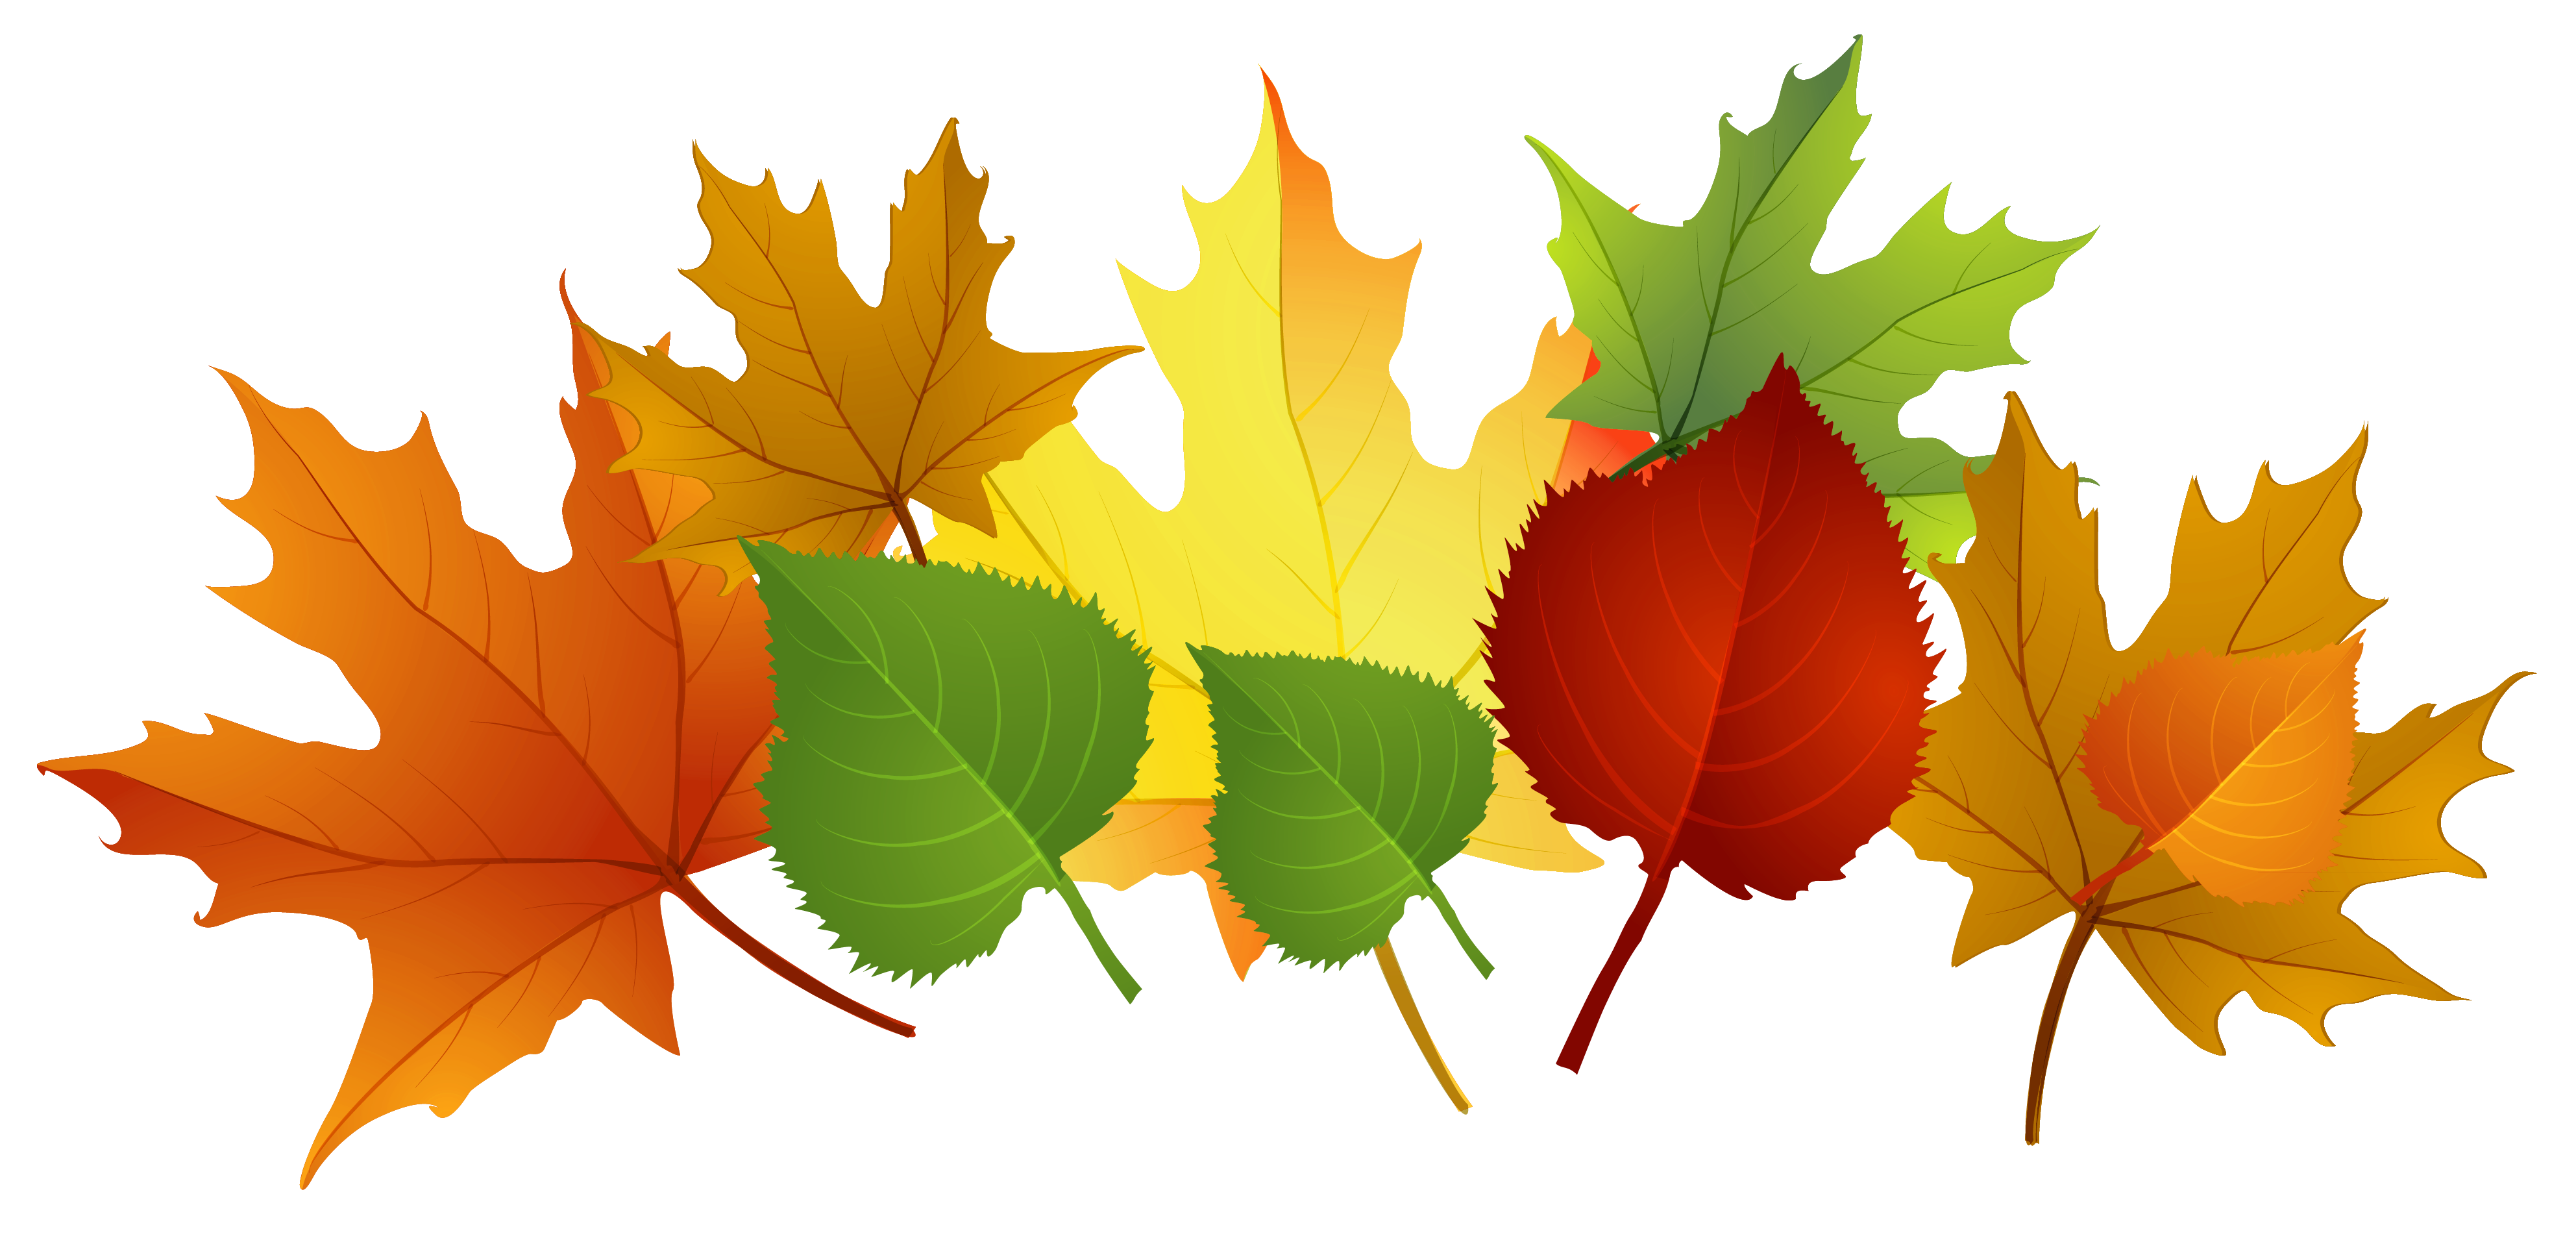 Leaf fall leaves clip art fre - Free Clip Art Leaves